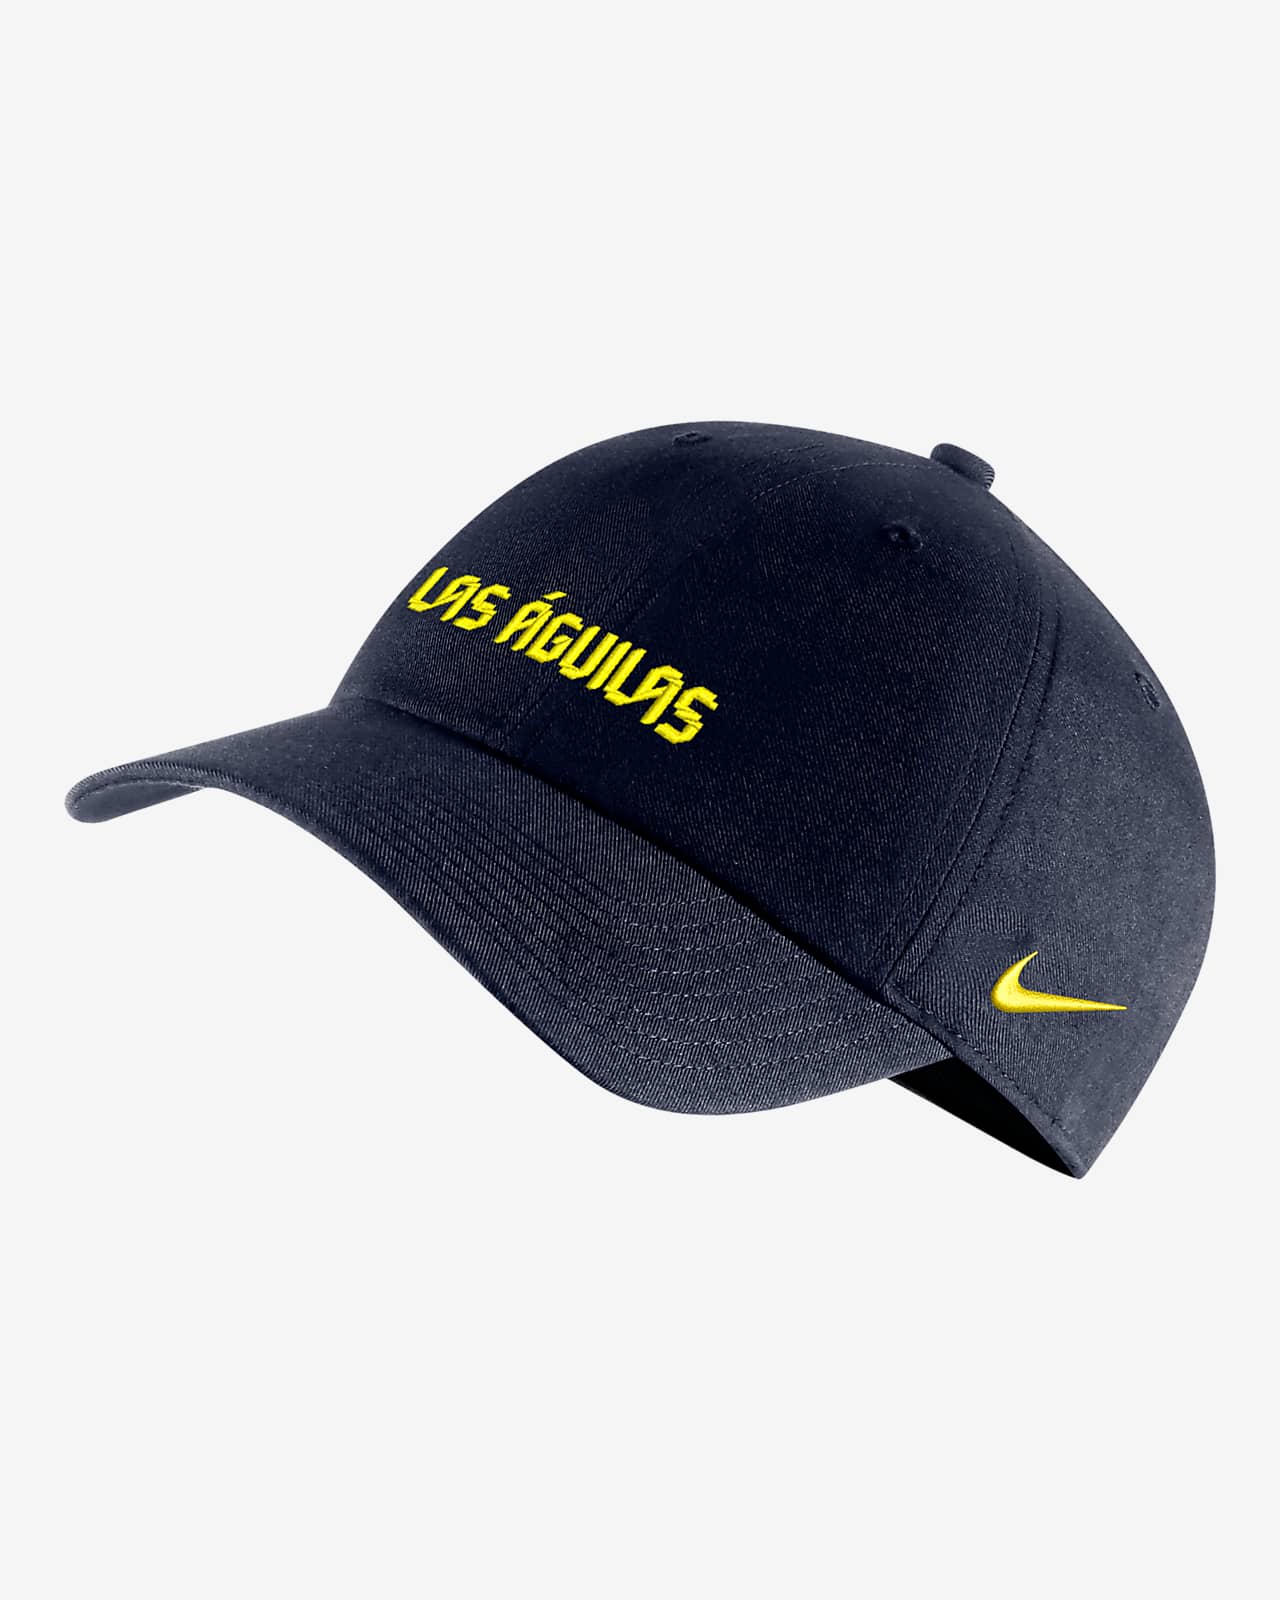 Club America Campus Men's Nike Soccer Adjustable Hat